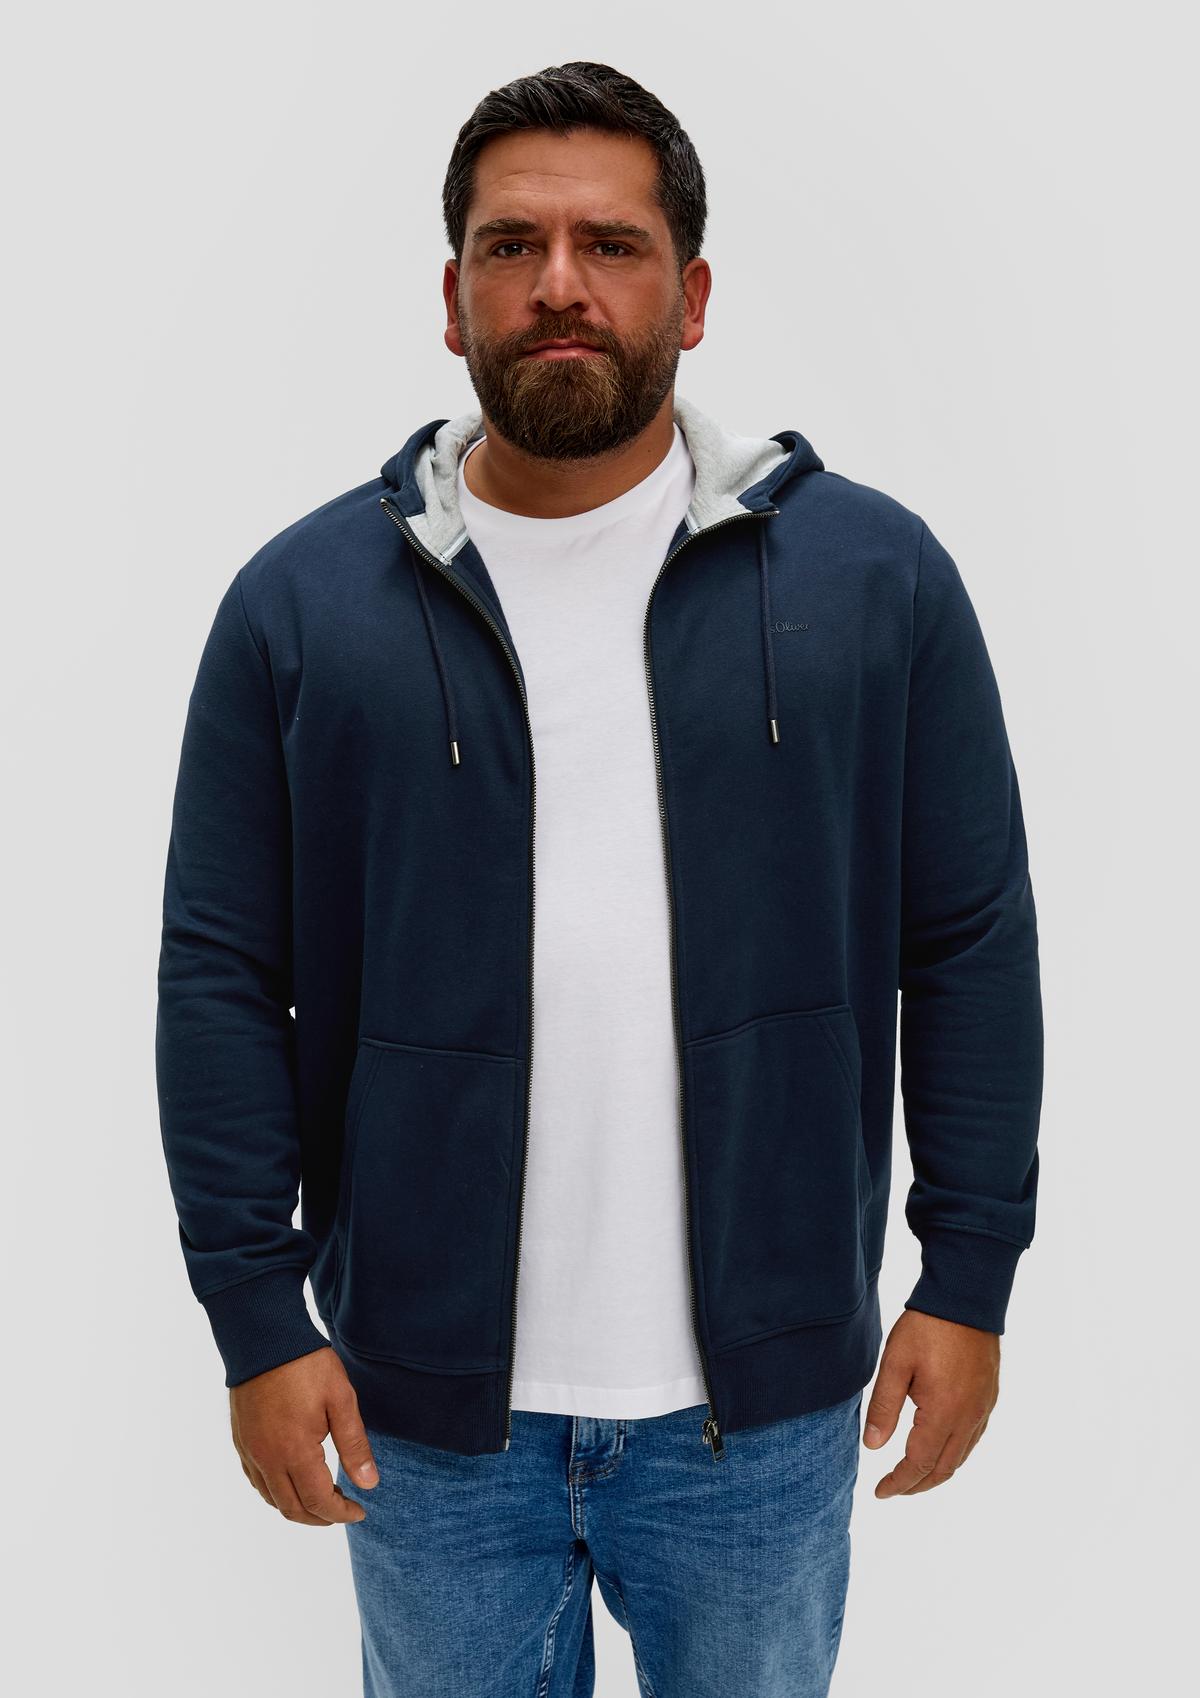 s.Oliver Sweatshirt jacket with a hood